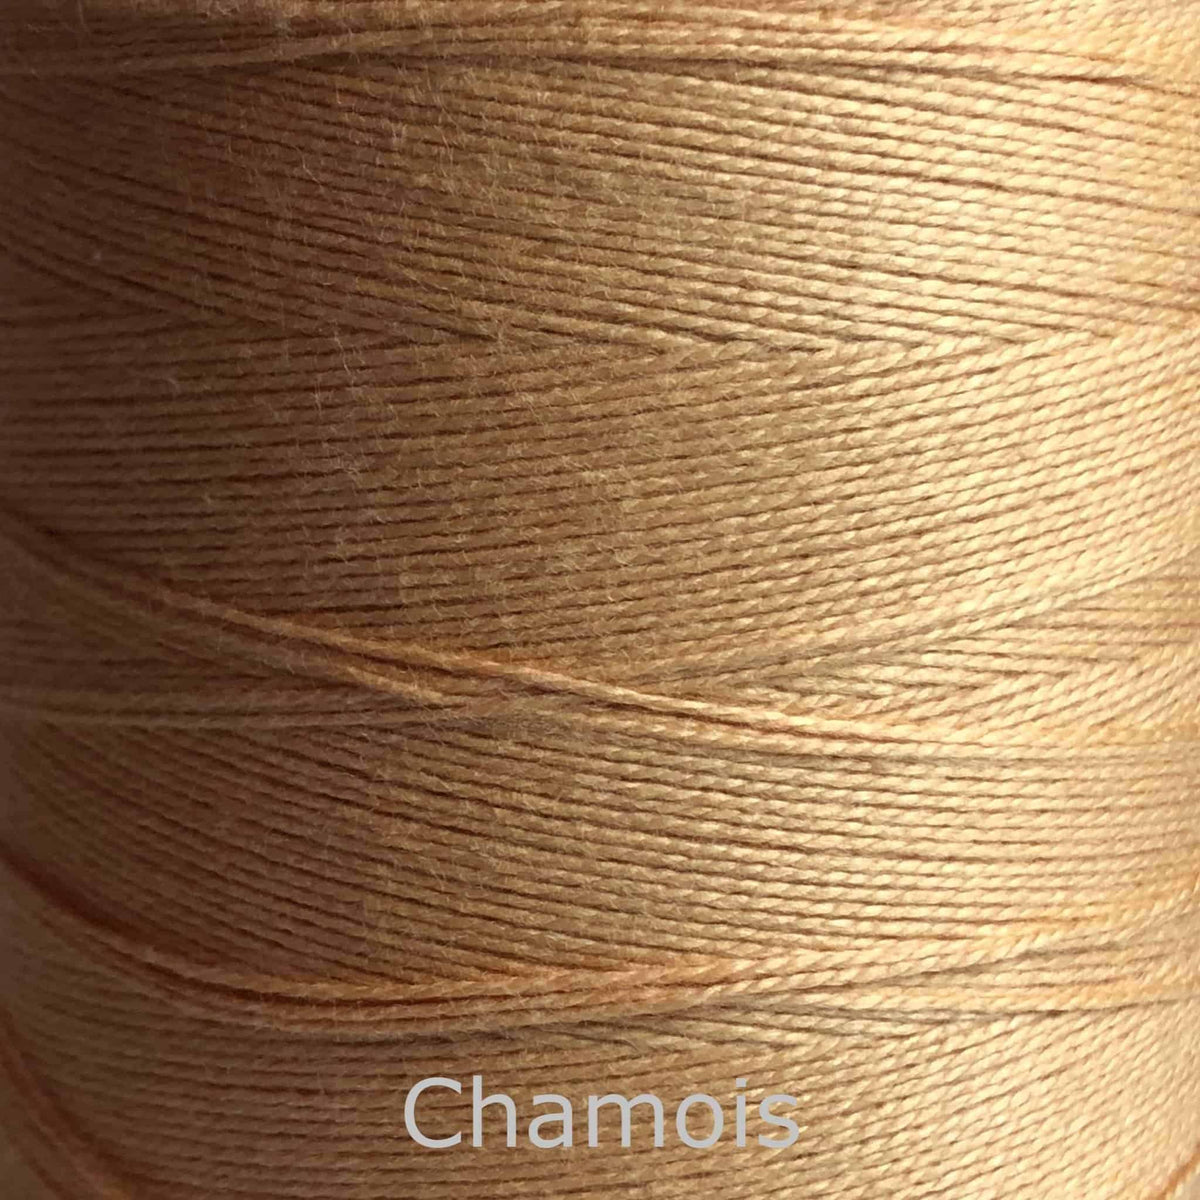 16/2 cotton weaving yarn chamois